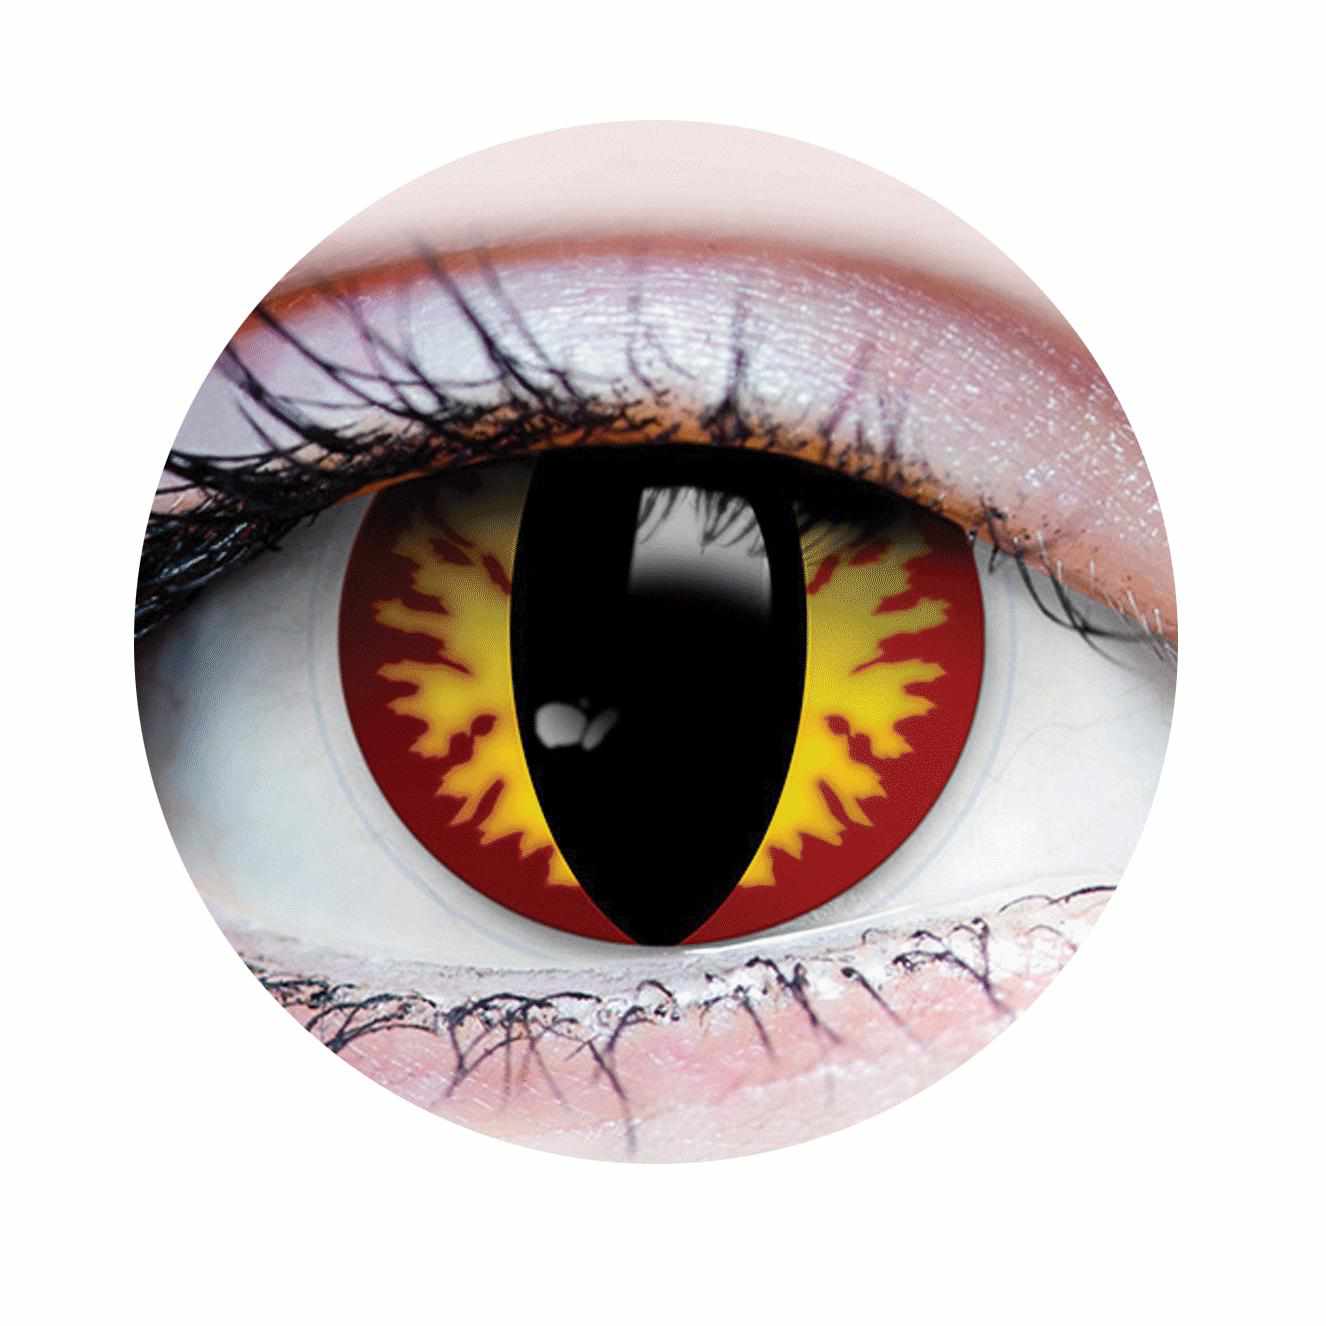 Dragon Eye Contacts- Vivid Dragon Eye Green Contacts